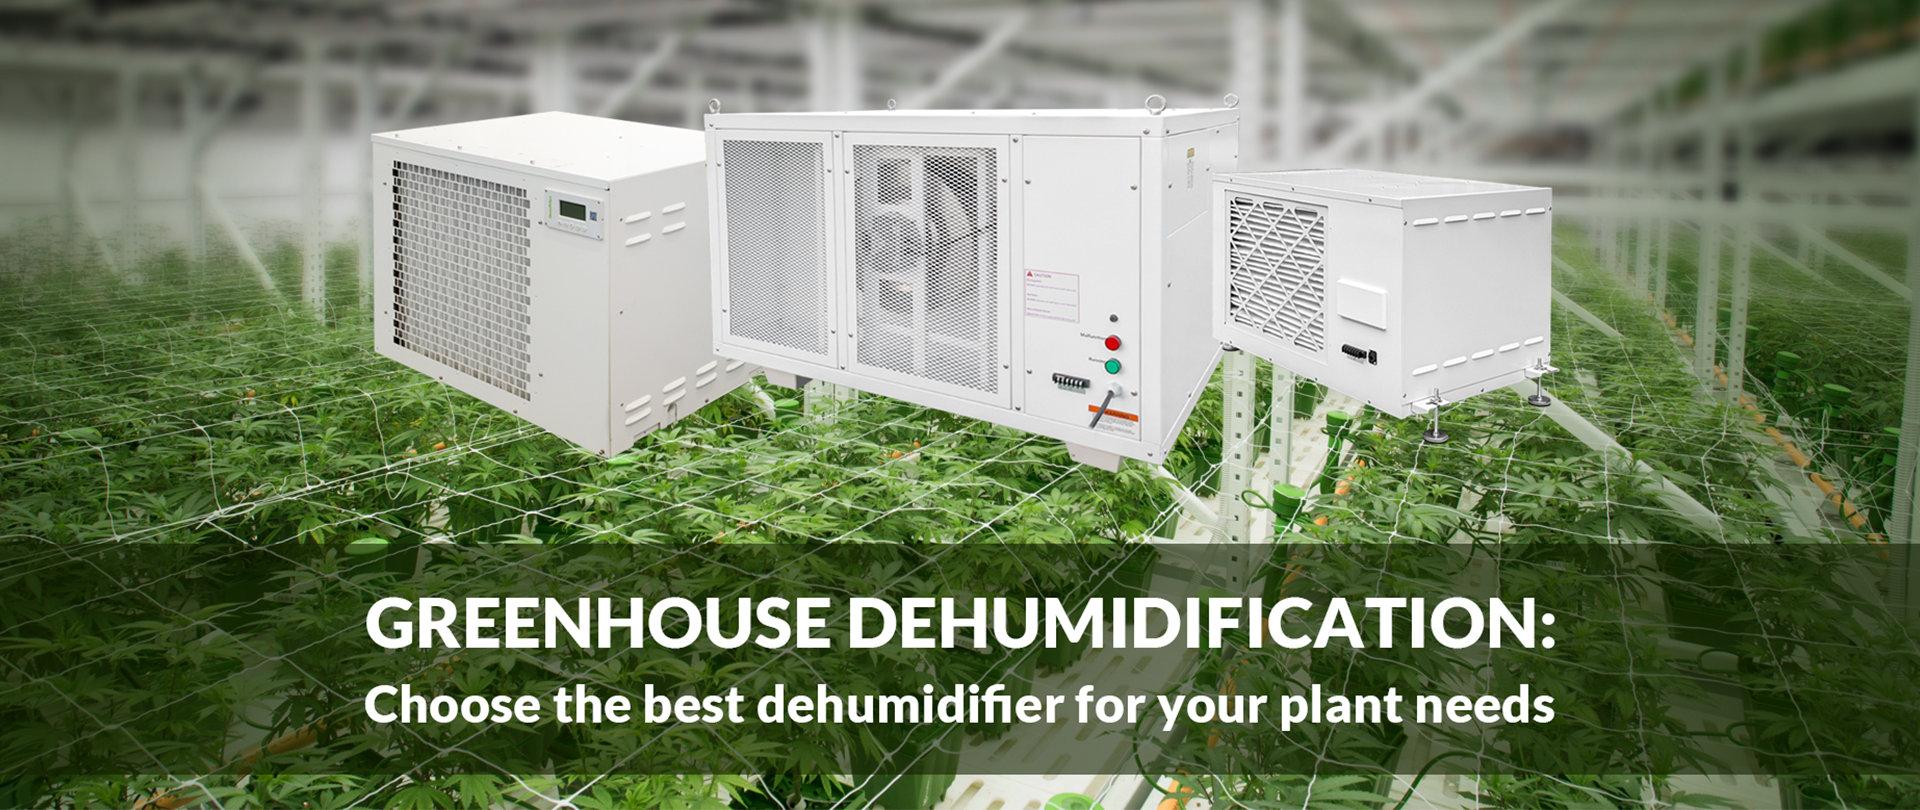 Preair Pro Series Dehumidifier For Greenhouse